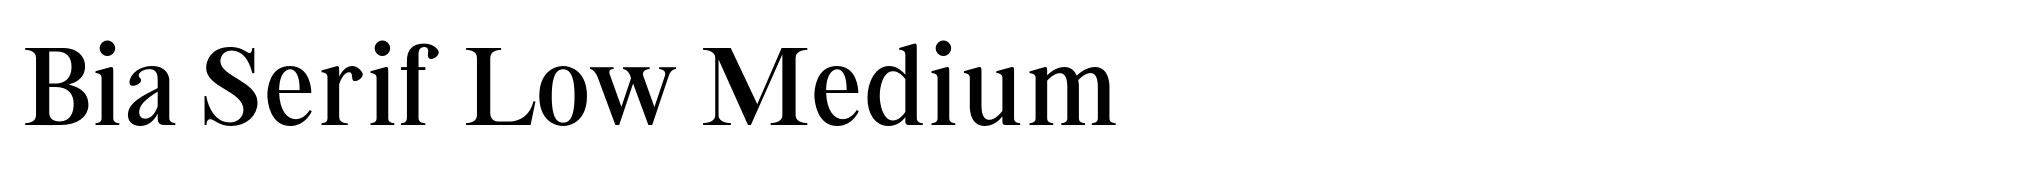 Bia Serif Low Medium image